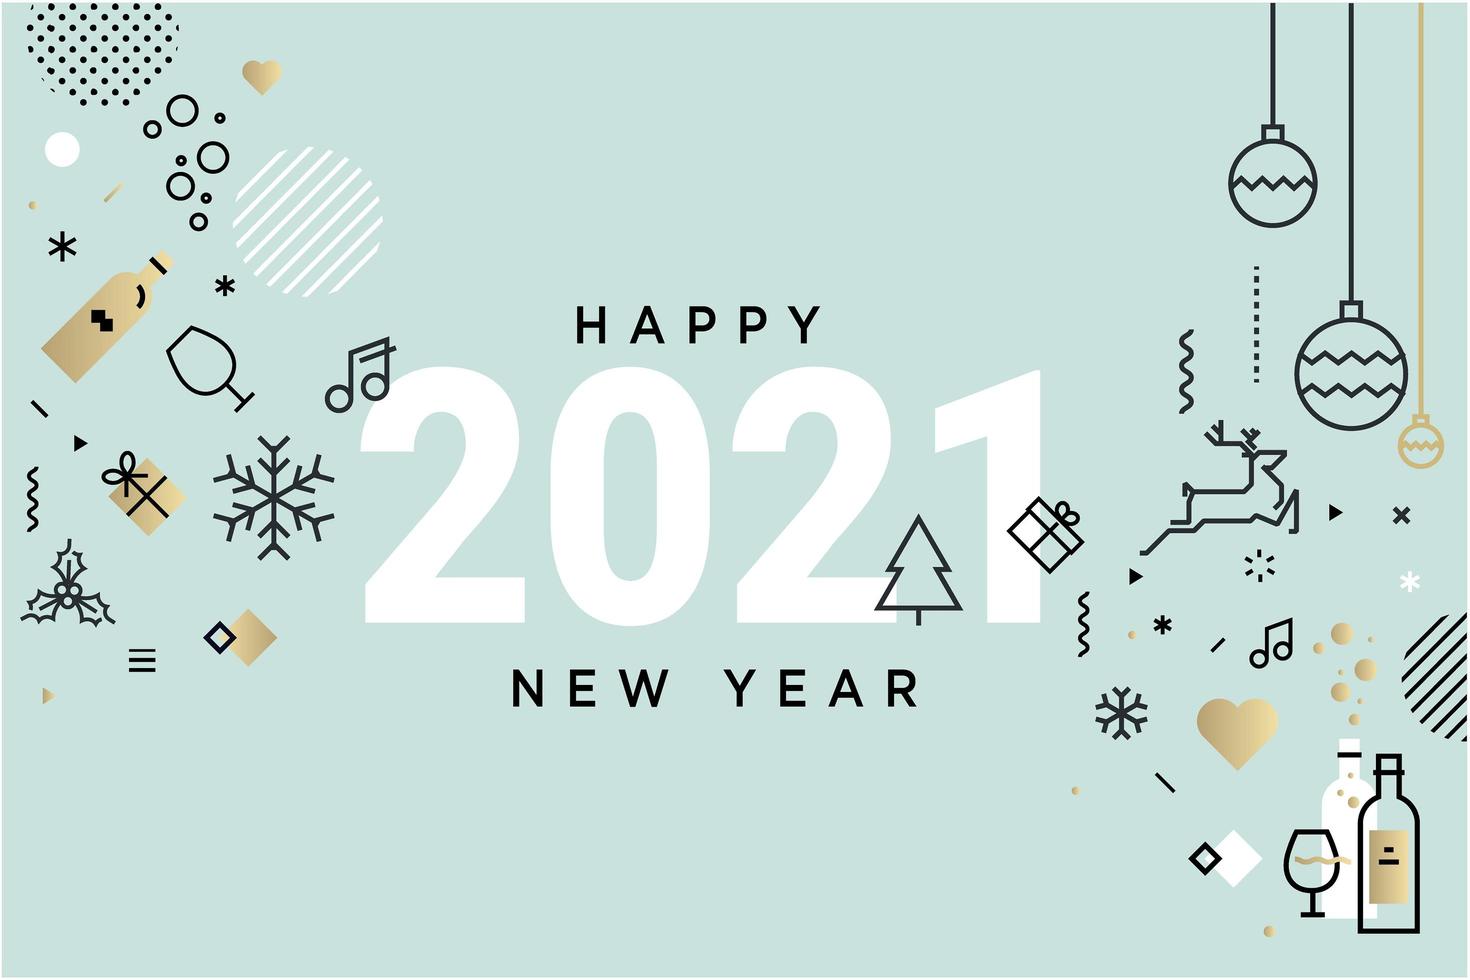 feliz ano novo 2021 vetor